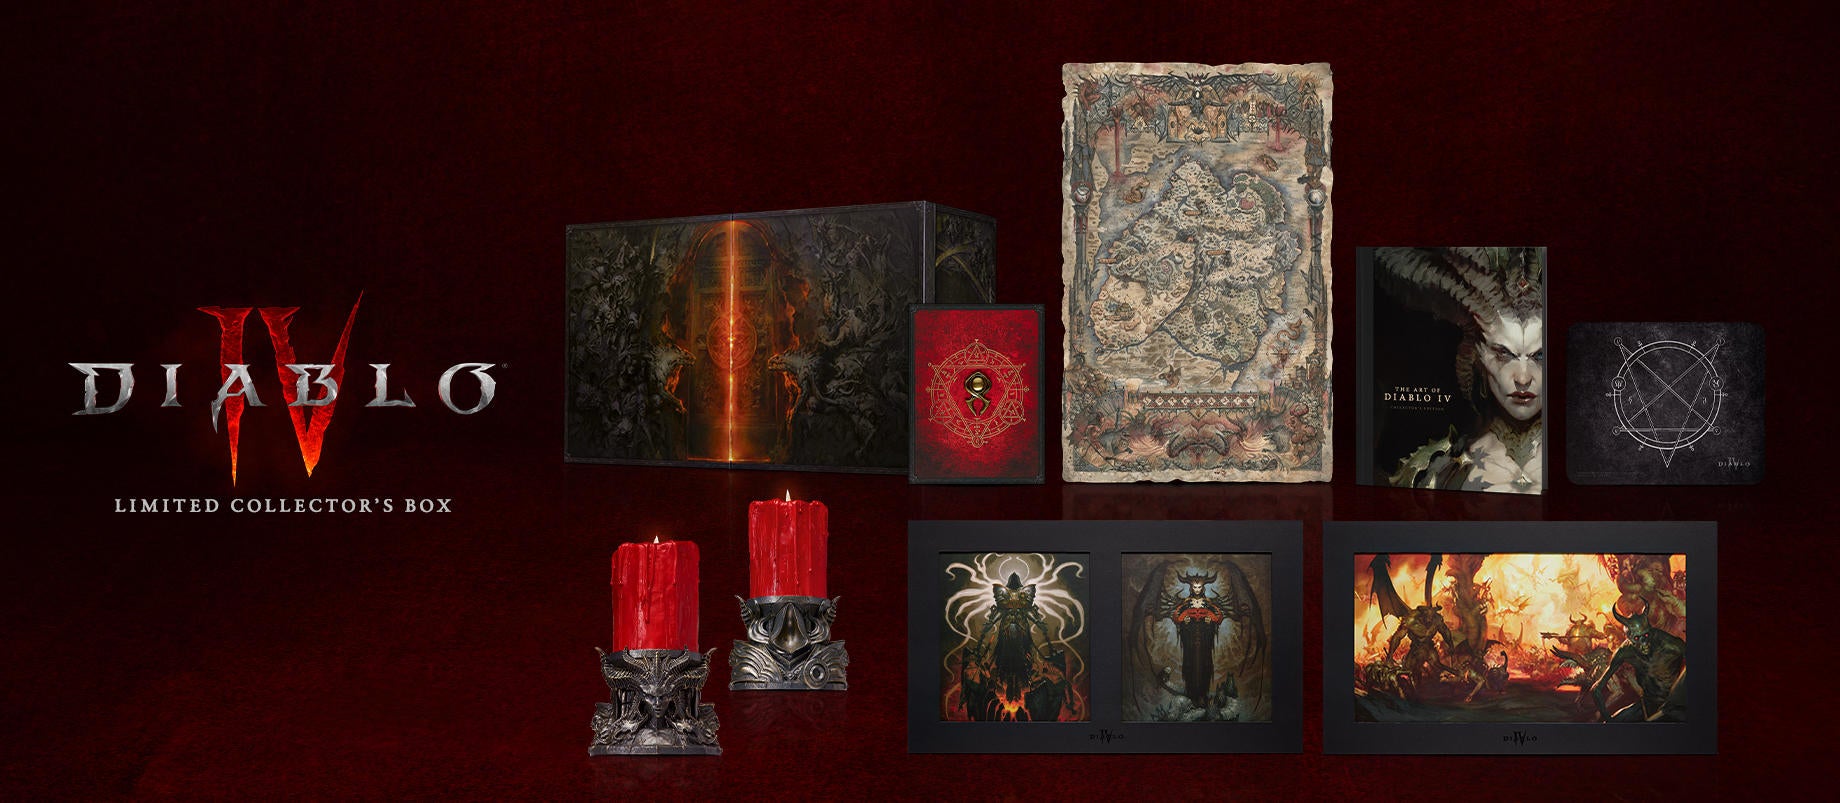 Diablo-iv-limited-collectors-box-1.jpg